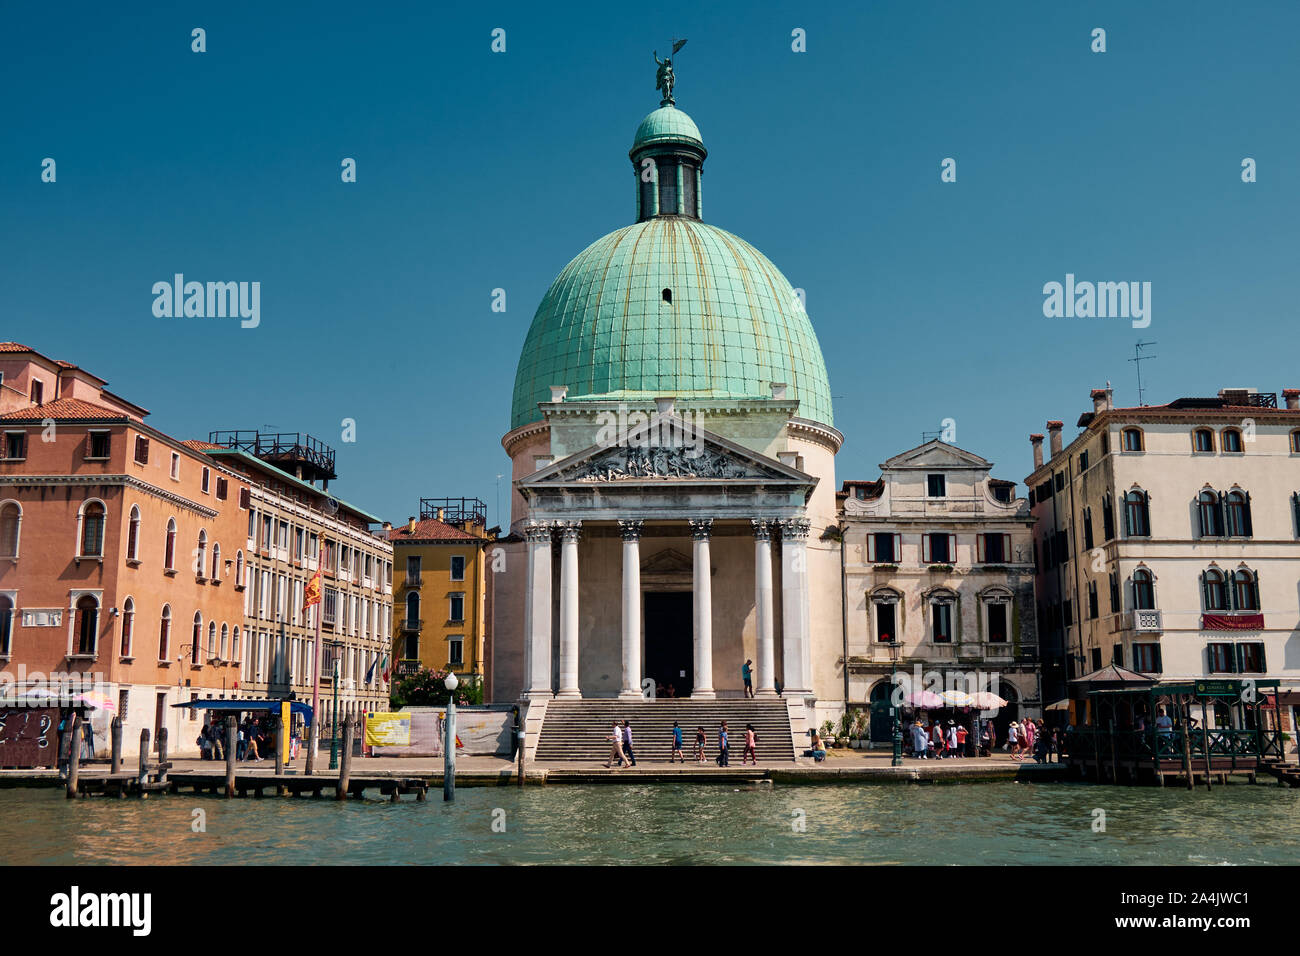 Venecia, Italia - Junio 19, 2019: El paisaje alrededor de San Simeone Piccolo iglesia en Venecia, Italia Foto de stock